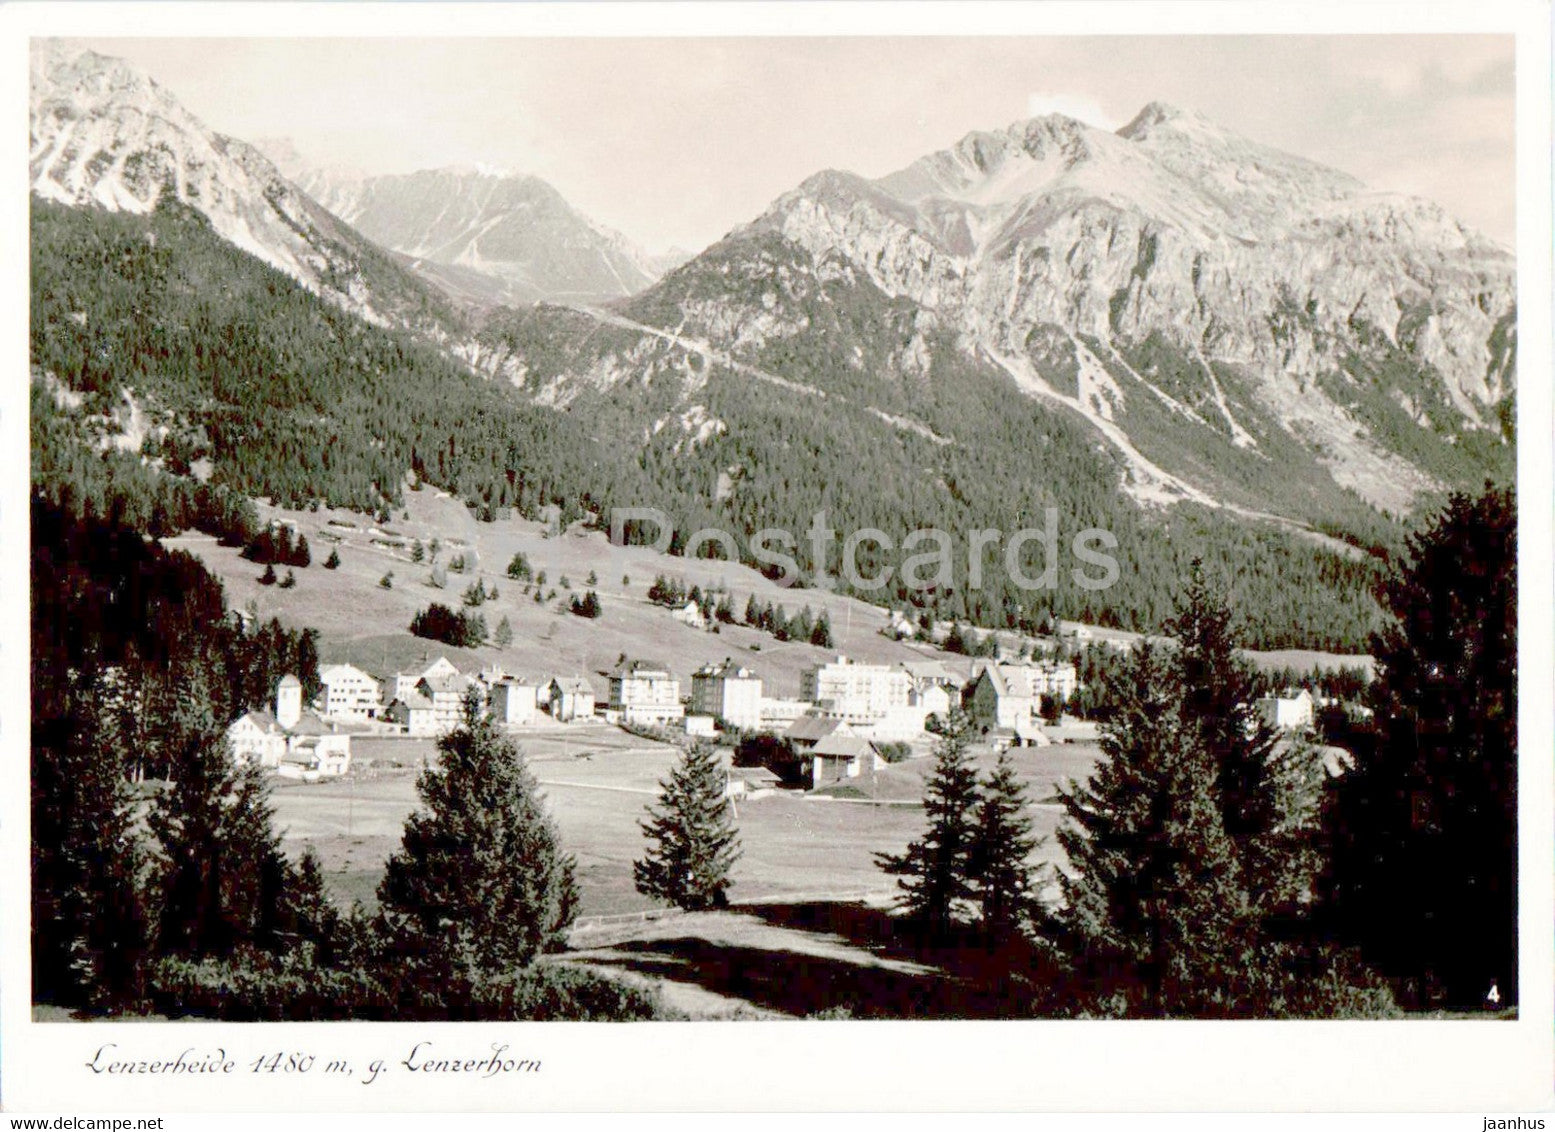 Lenzerheide 1480 m Lenzerhorn - 1939 - old postcard - Switzerland - used - JH Postcards